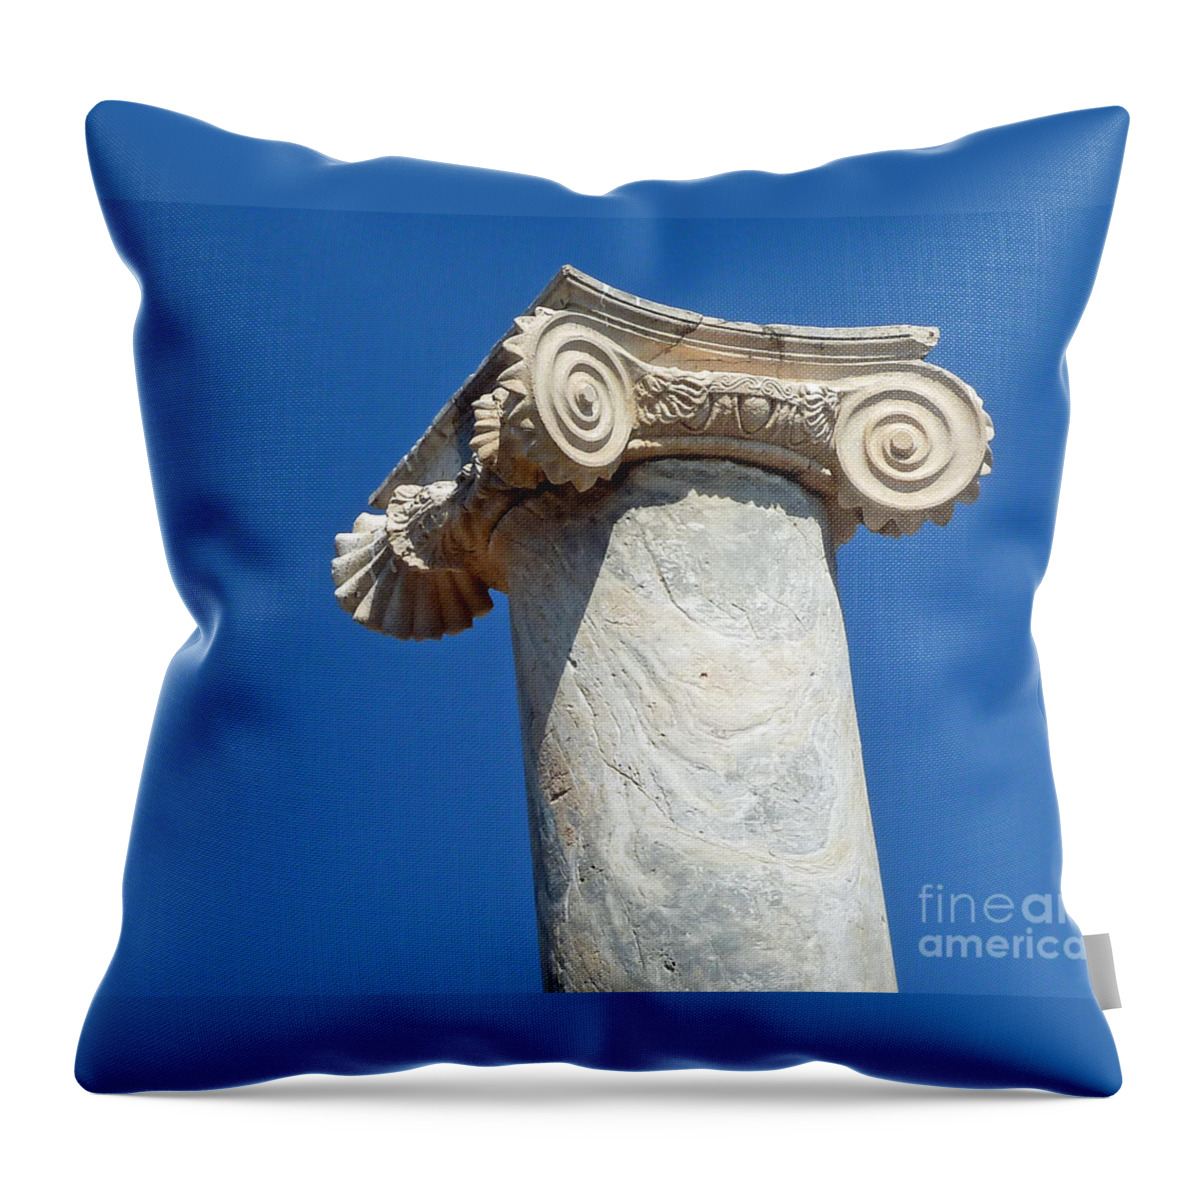 Delos Throw Pillow featuring the photograph Ancient Delos Greece by Cheryl Del Toro